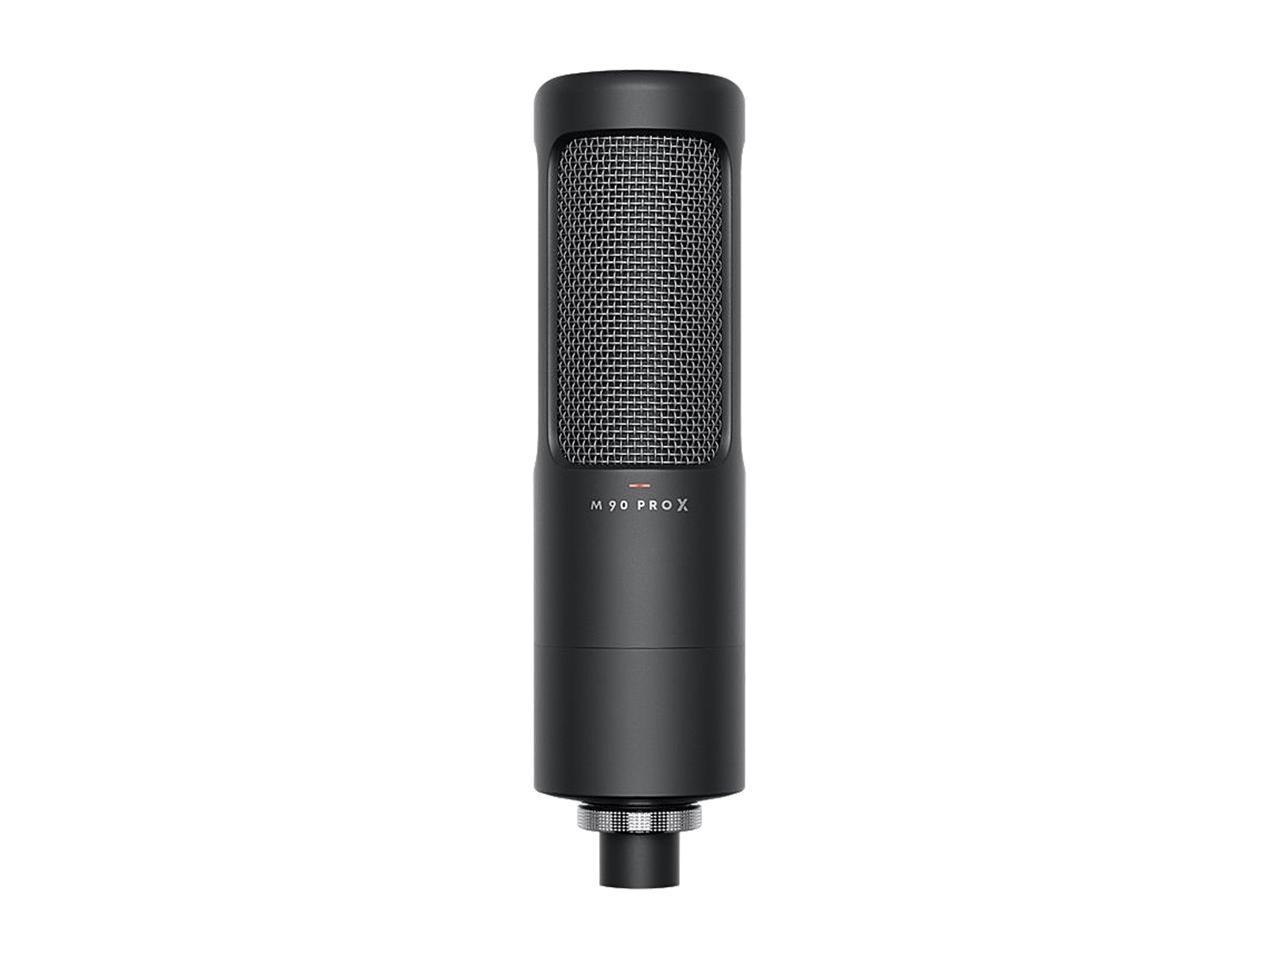 Beyerdynamic M90 Pro X True Condenser Microphone For Home